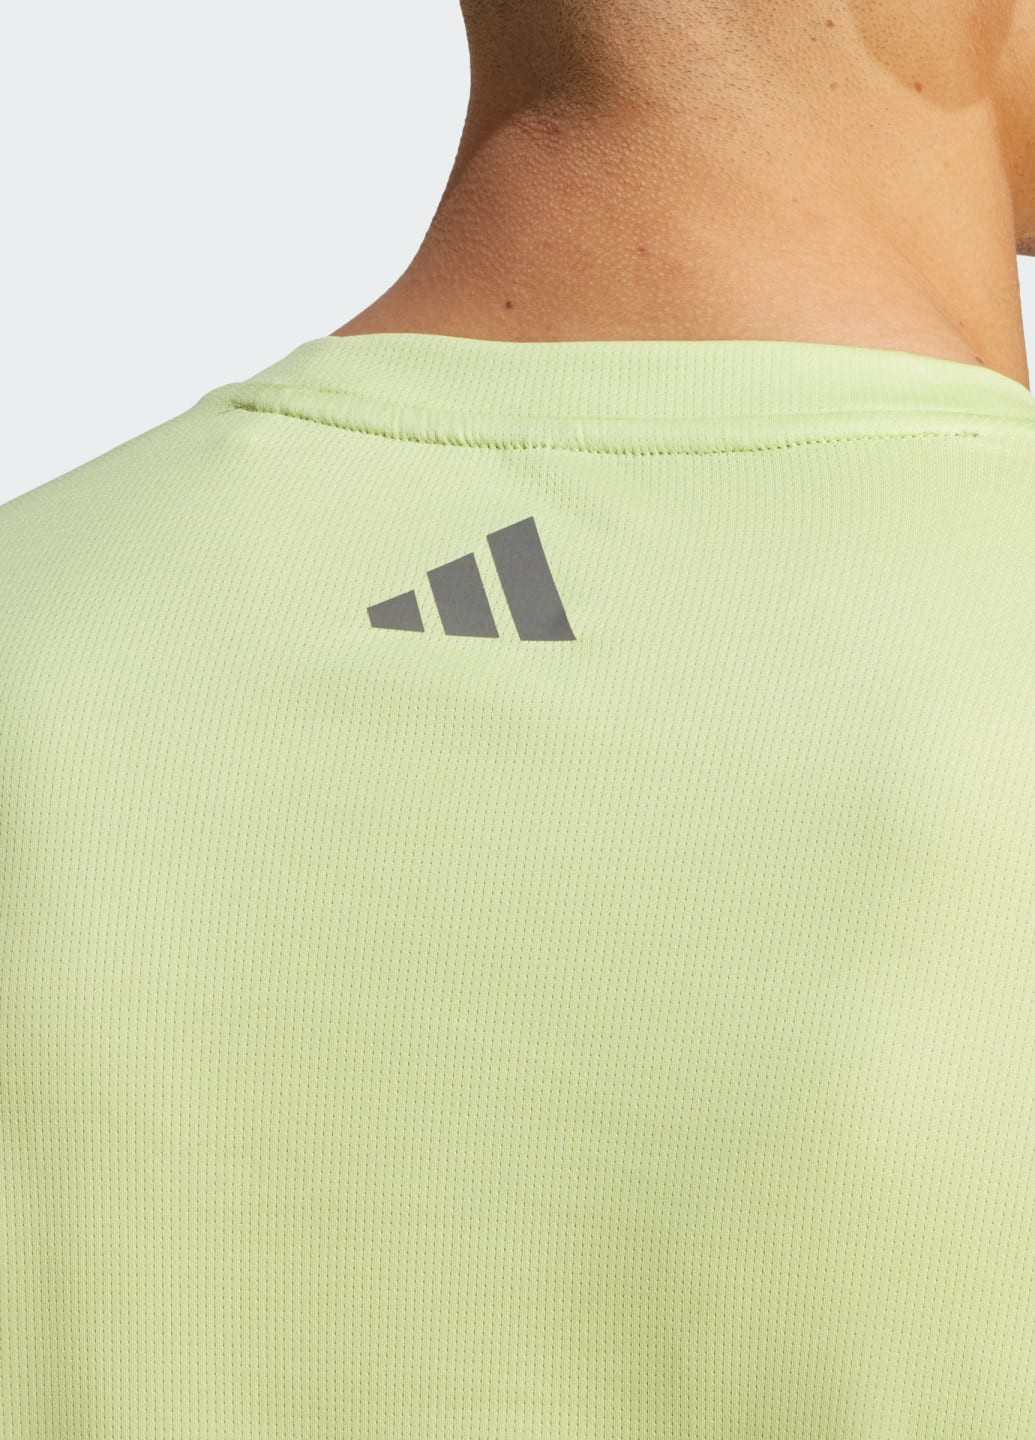 Зеленая футболка hiit graphic training adidas